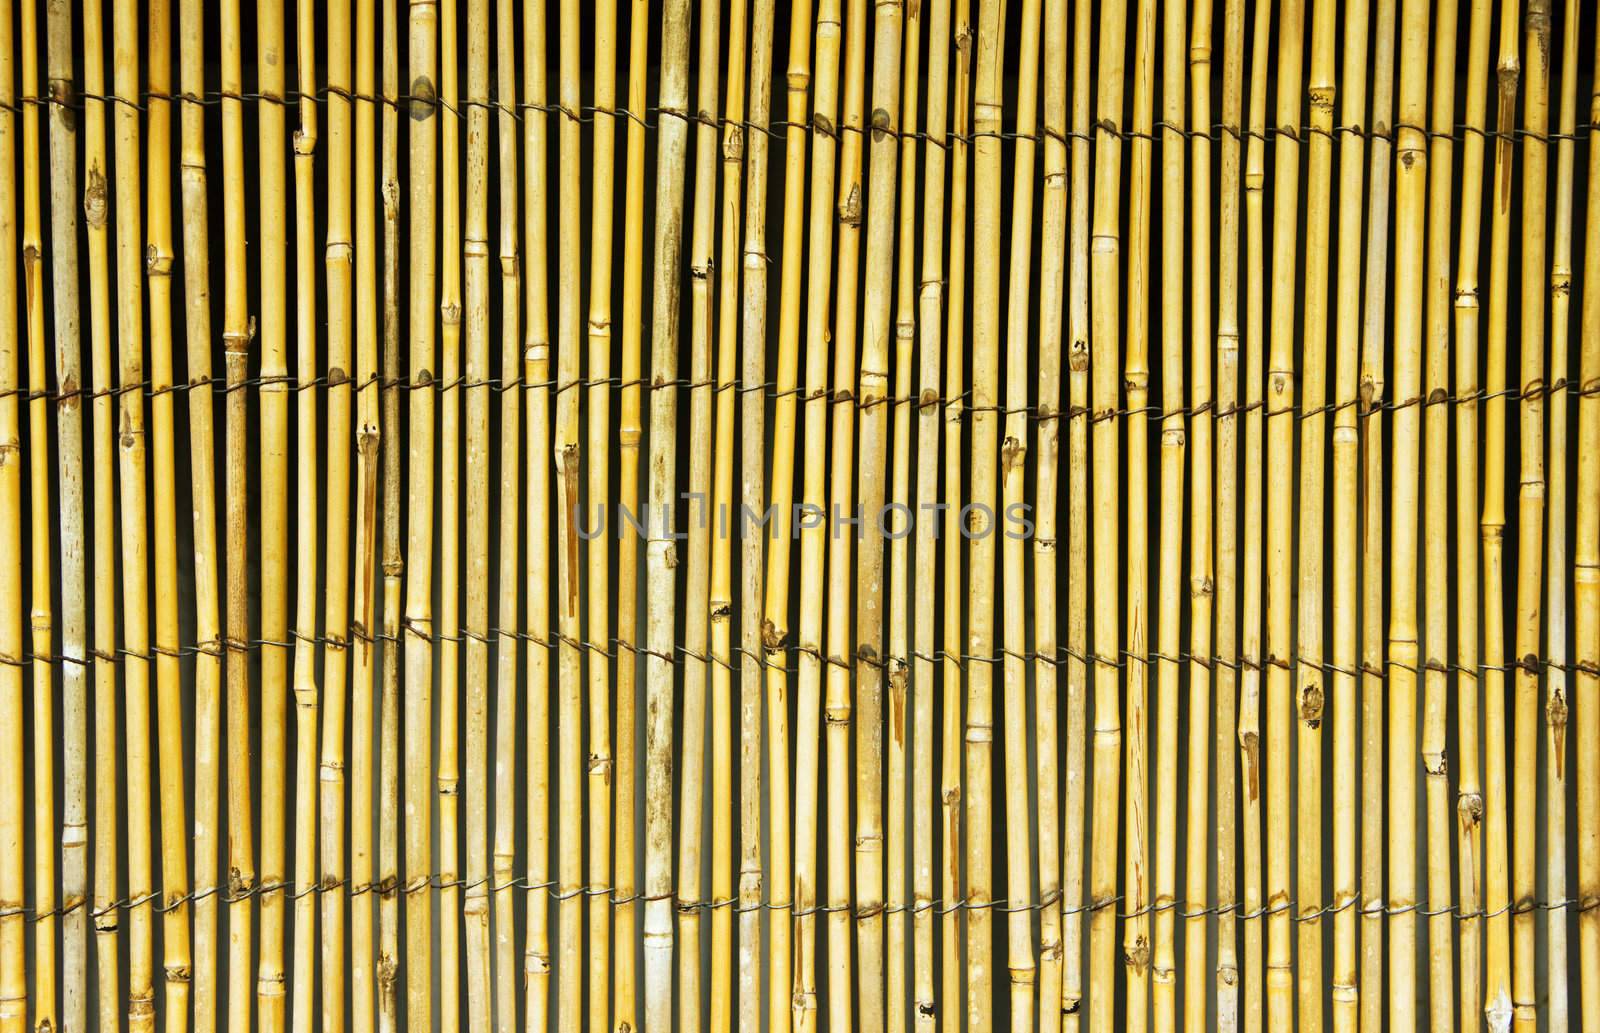 Bamboo background by Jaykayl